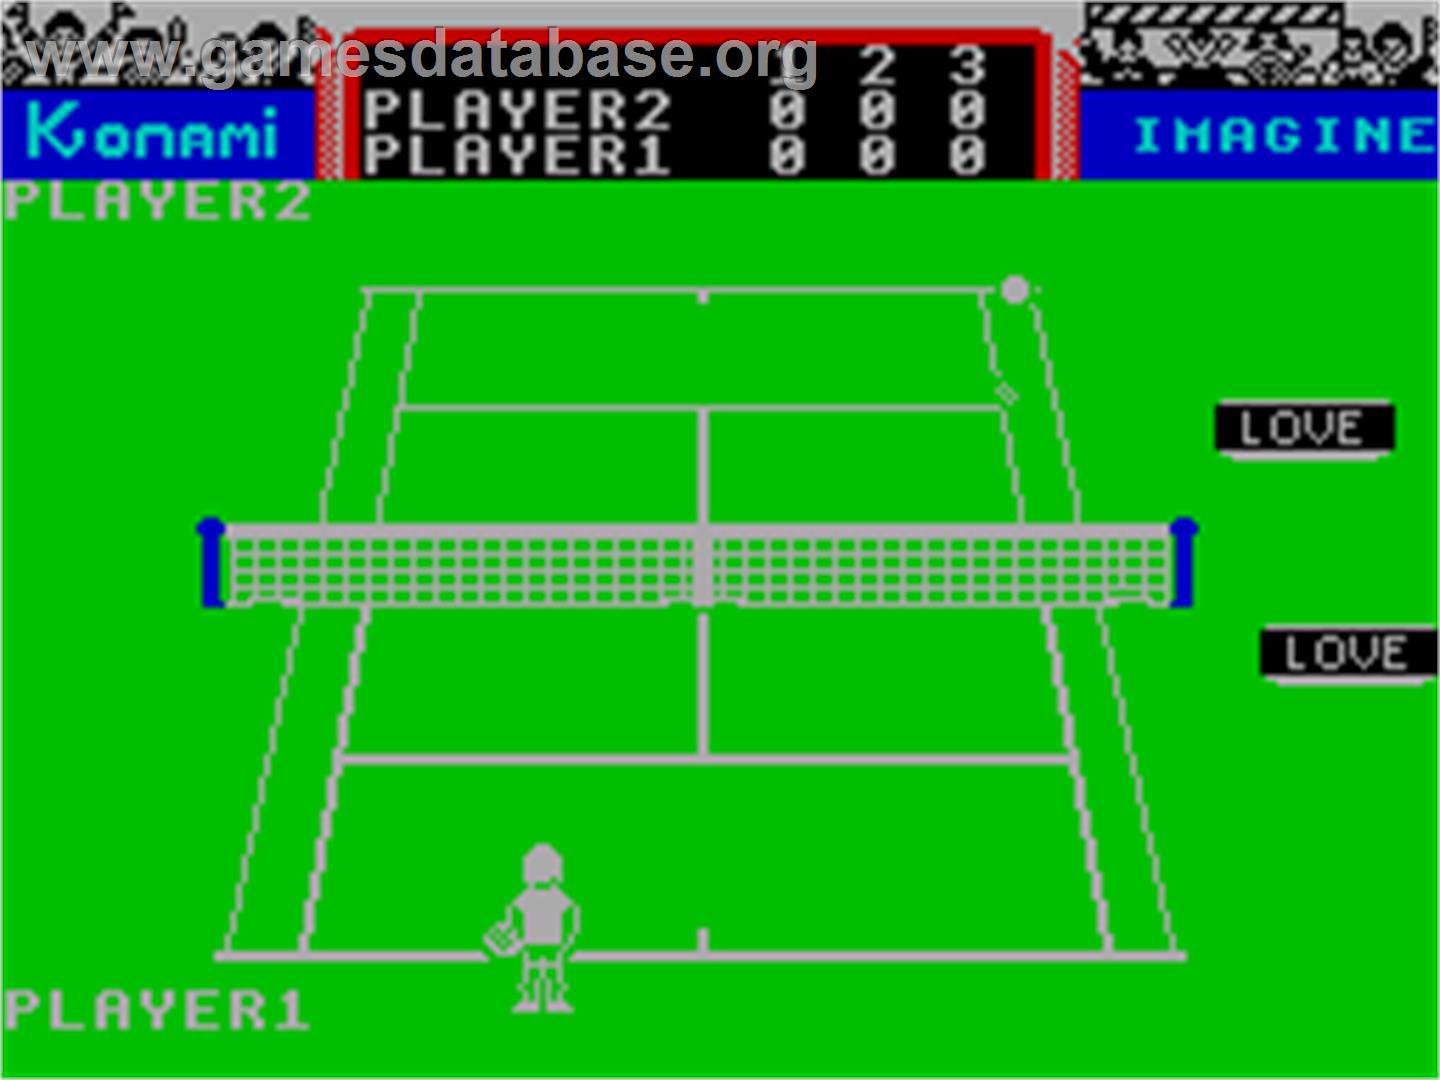 Konami's Tennis - Sinclair ZX Spectrum - Artwork - In Game